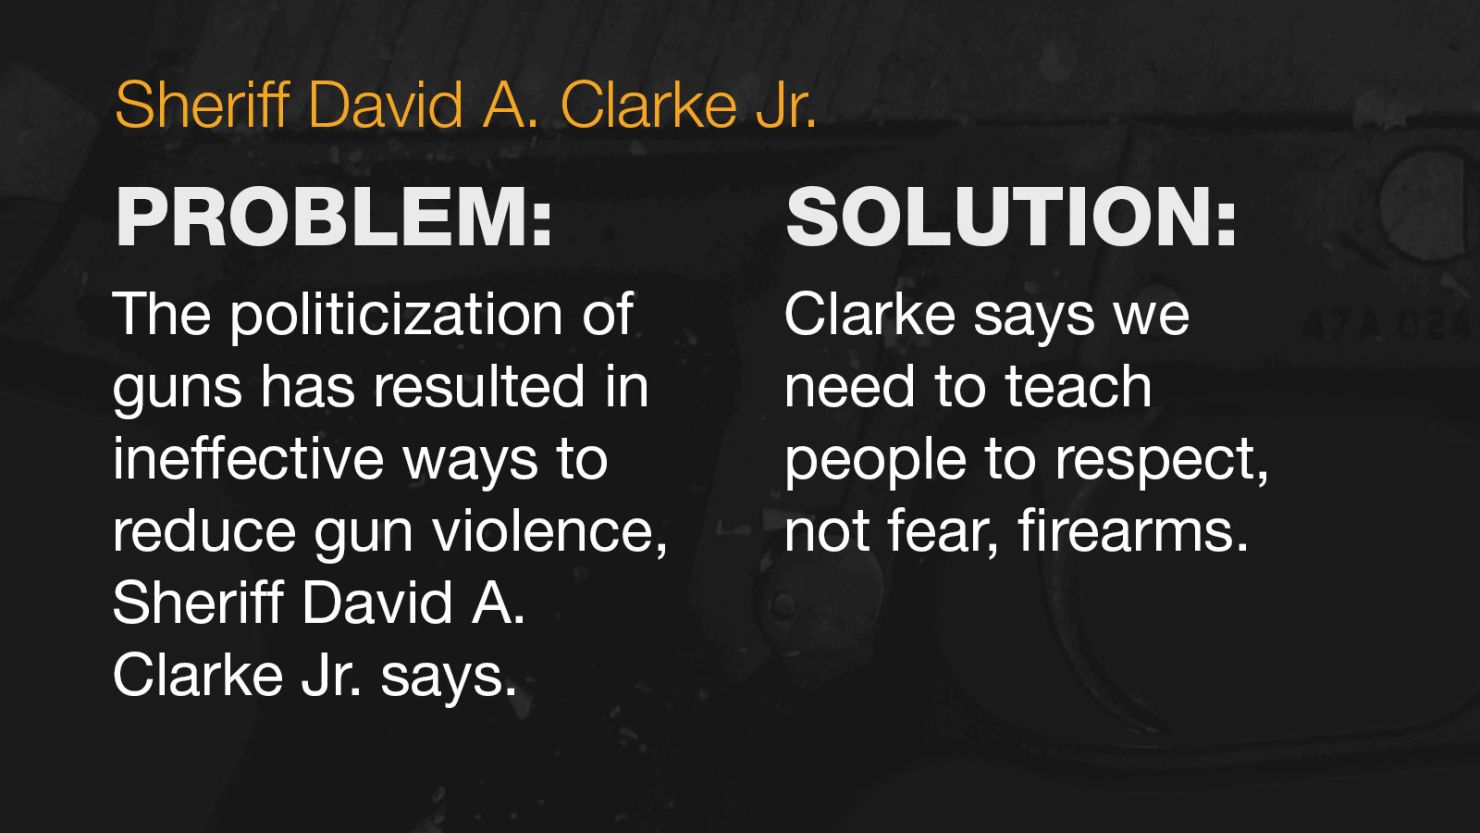 Clarke opinion